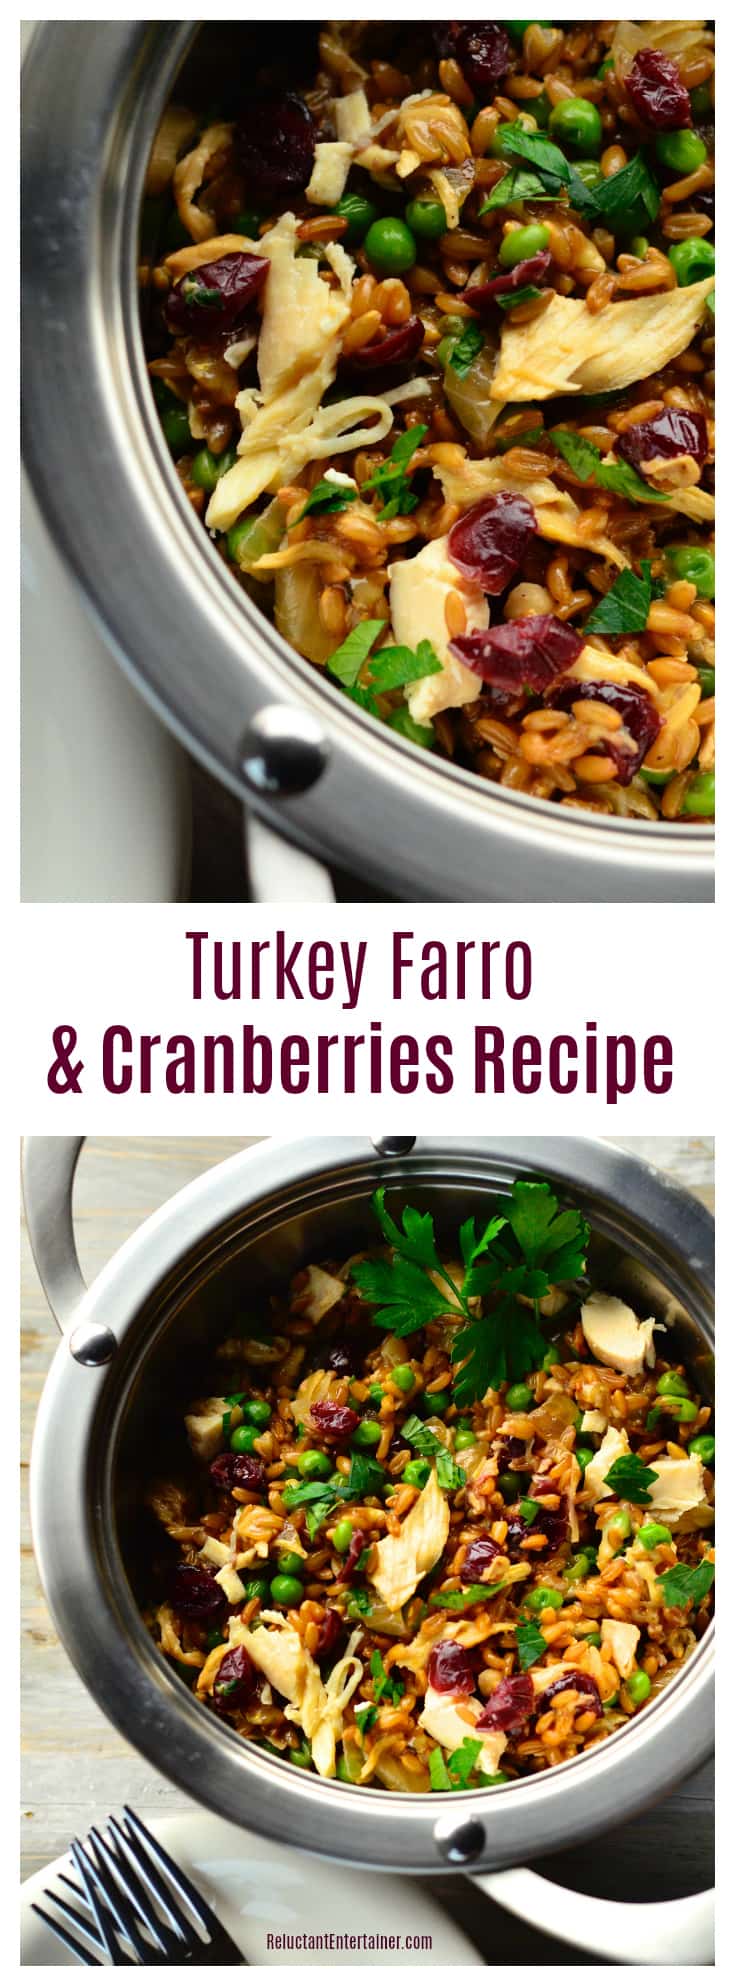 Turkey Farro Cranberries Recipe